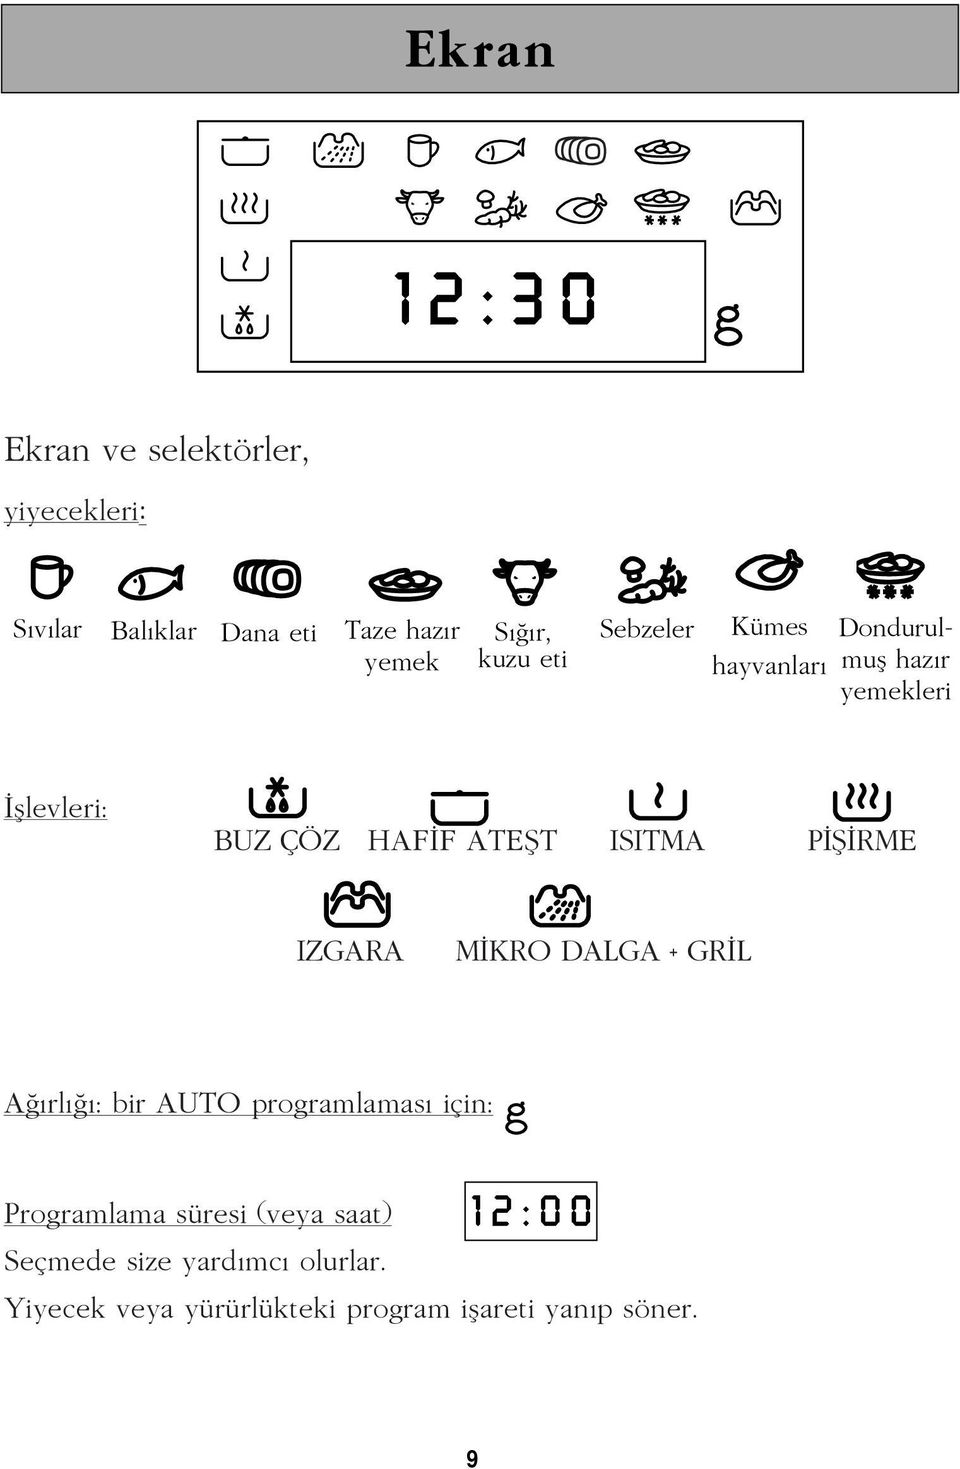 PÝÞÝRME IZGARA MÝKRO DALGA + GRÝL Aðýrlýðý: bir AUTO programlamasý için: Programlama süresi (veya